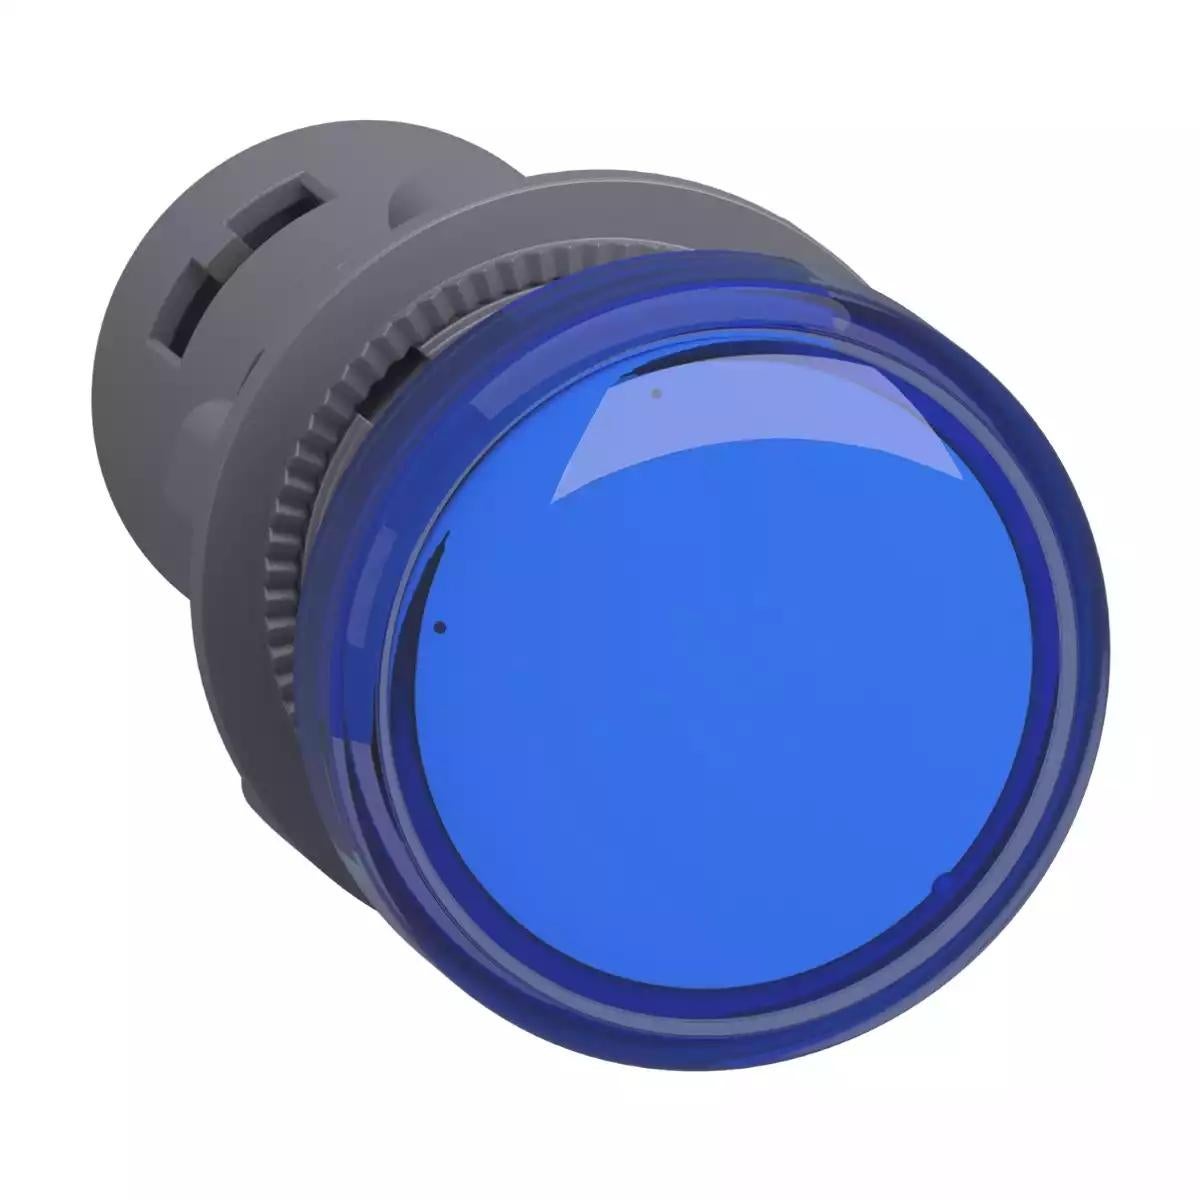 Pilot light, plastic, blue, Ø 22 mm, with integral LED, 24 V AC/DC